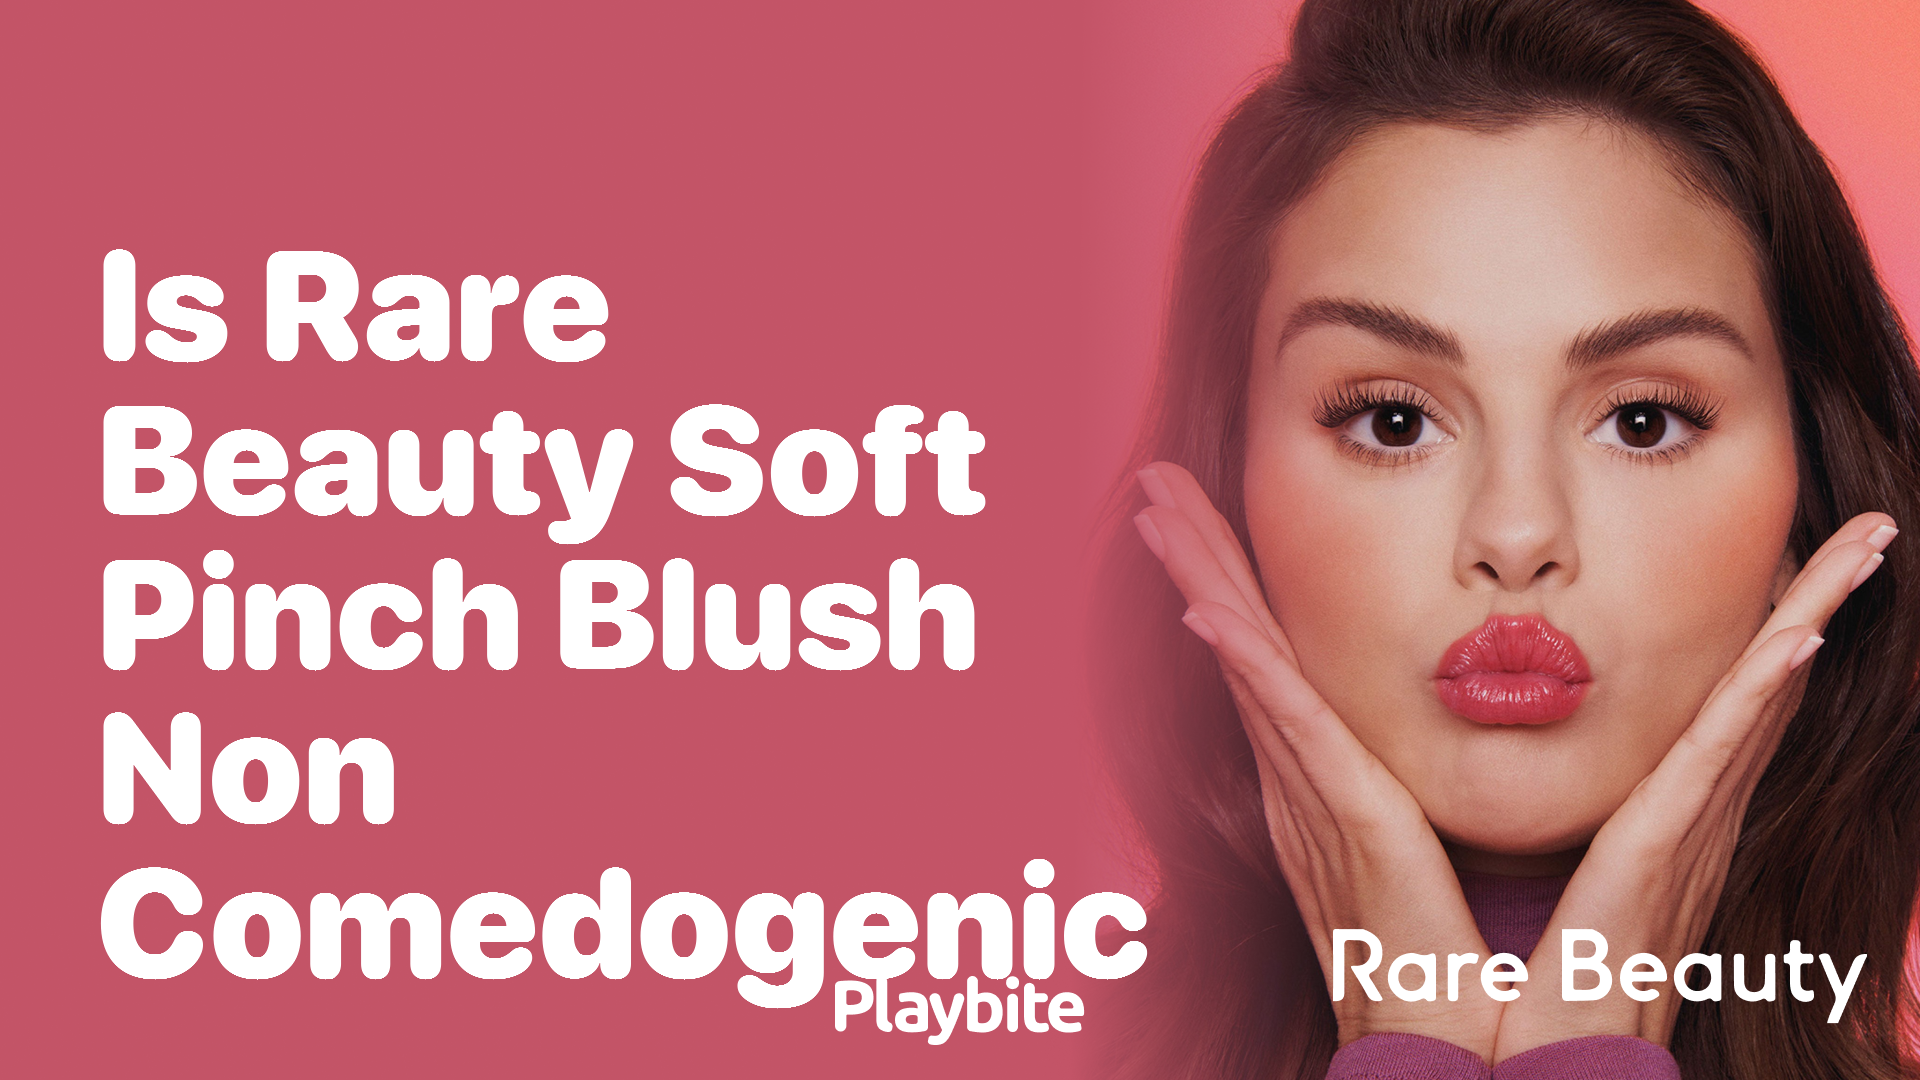 Is Rare Beauty Soft Pinch Blush Non-Comedogenic?